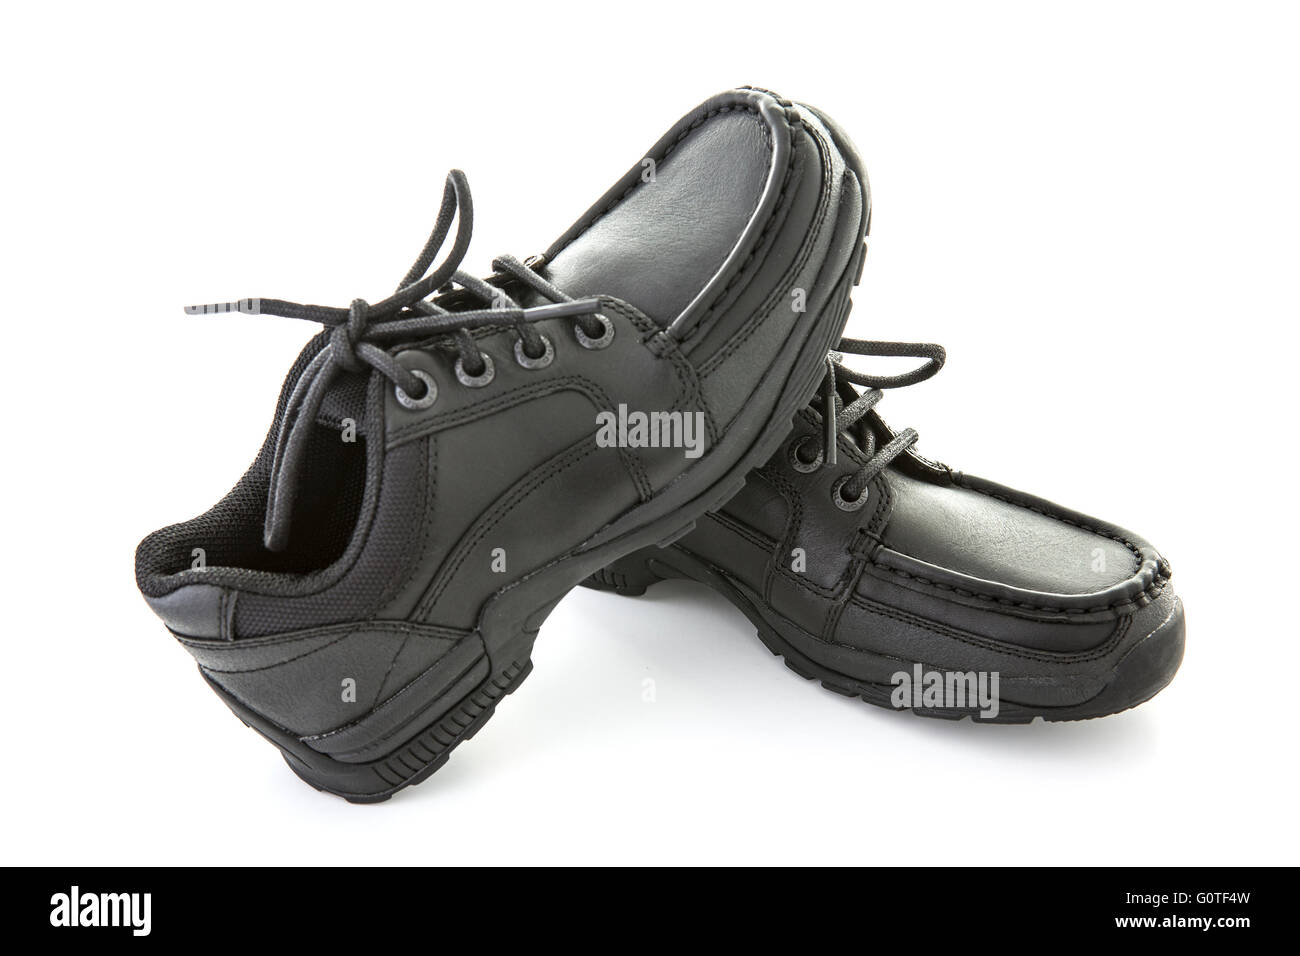 black shoes for boys school